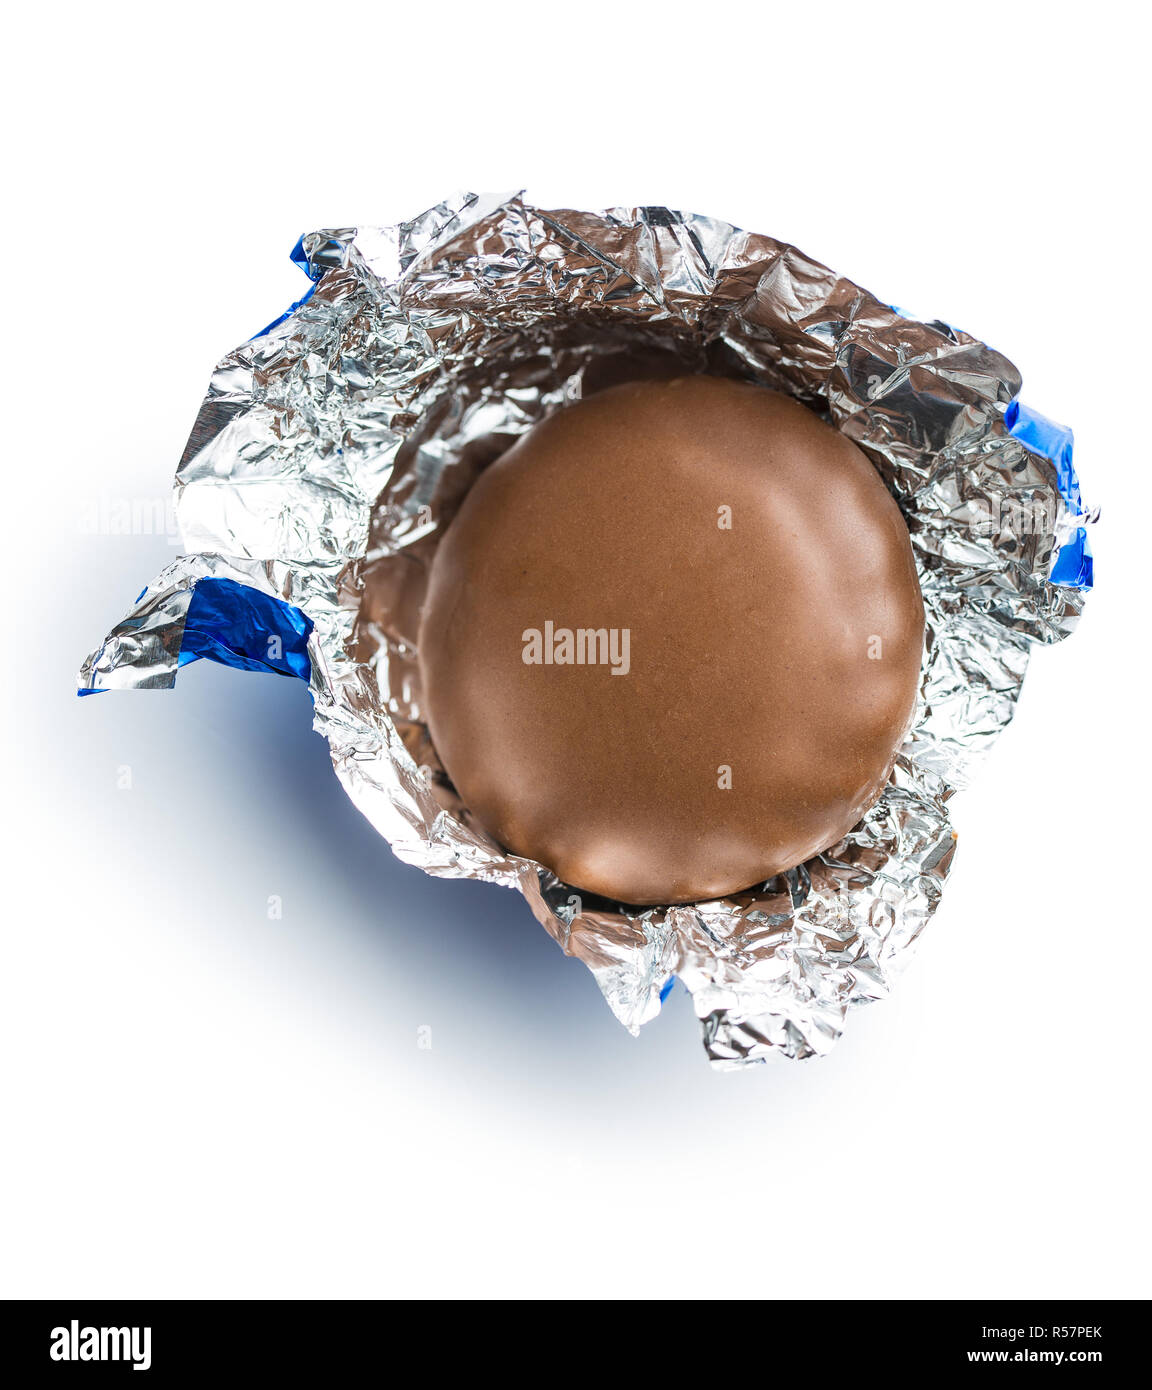 https://c8.alamy.com/comp/R57PEK/chocolate-biscuit-wrapped-in-aluminium-foil-R57PEK.jpg